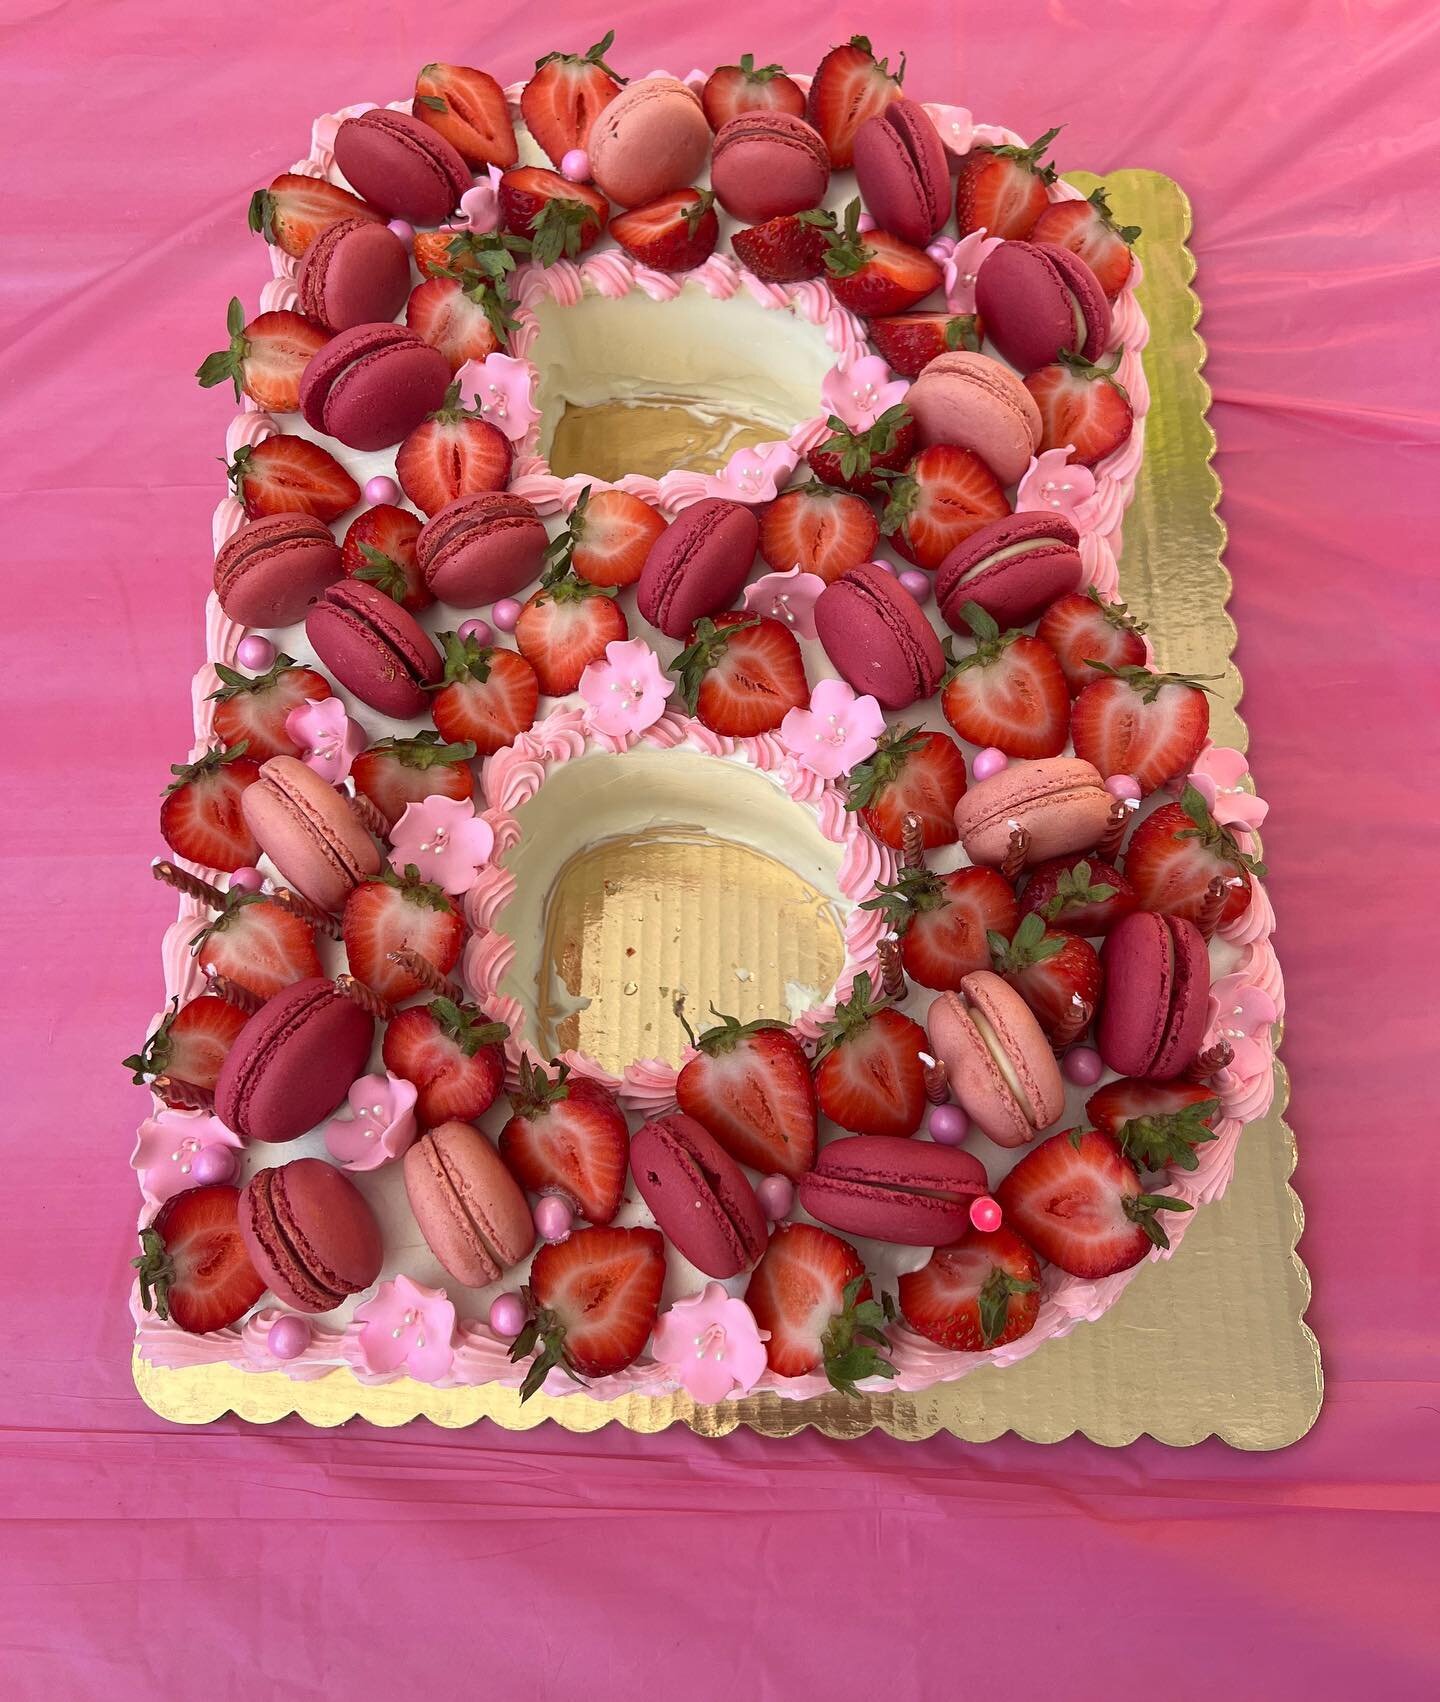 &ldquo;B&rdquo; for the birthday girl! 🍰🎂
.
.
.
.
.
#birthdaycake #babyshowercake #bridalshowercake #cakeideas #customcakes #macarons #njbakery #njbaker #pinkcake #dessert #yummy #cakesofinstagram #njbusiness